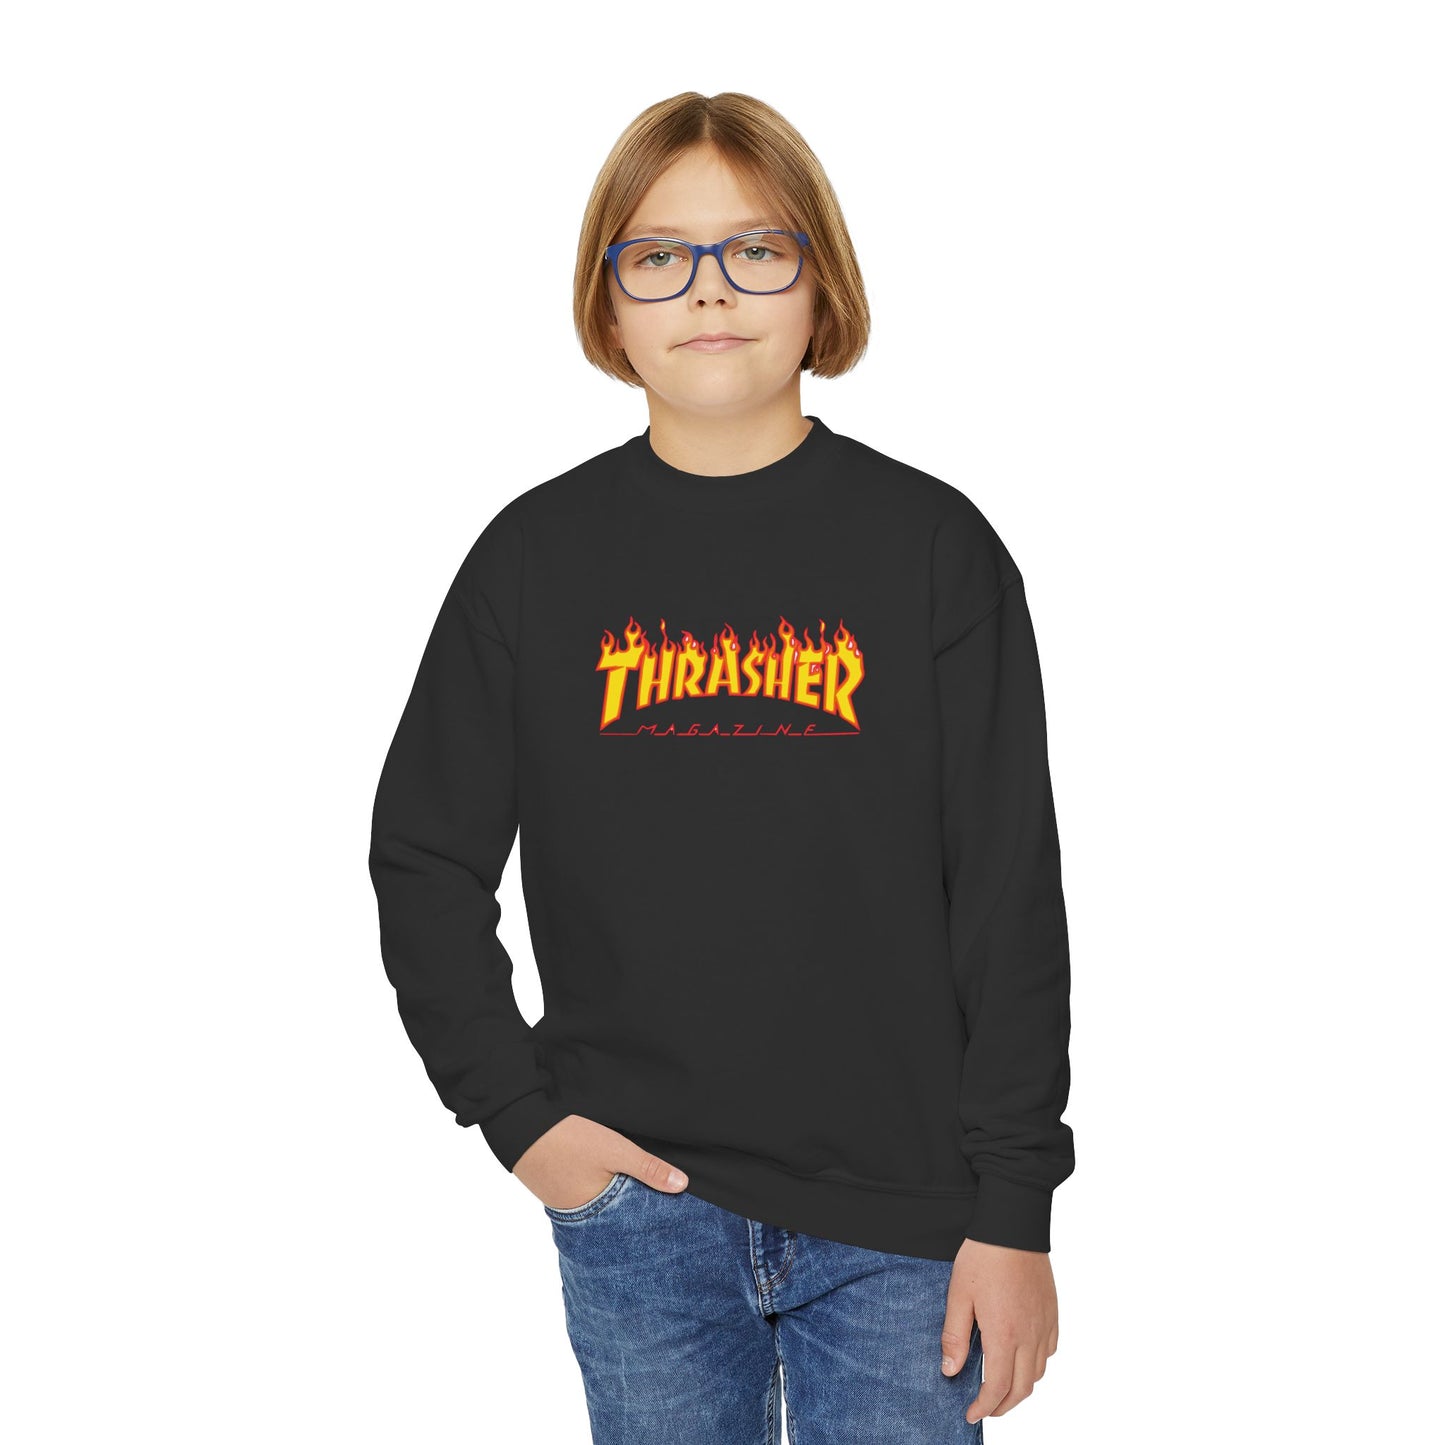 Thrasher Magazine Youth Sweatshirt